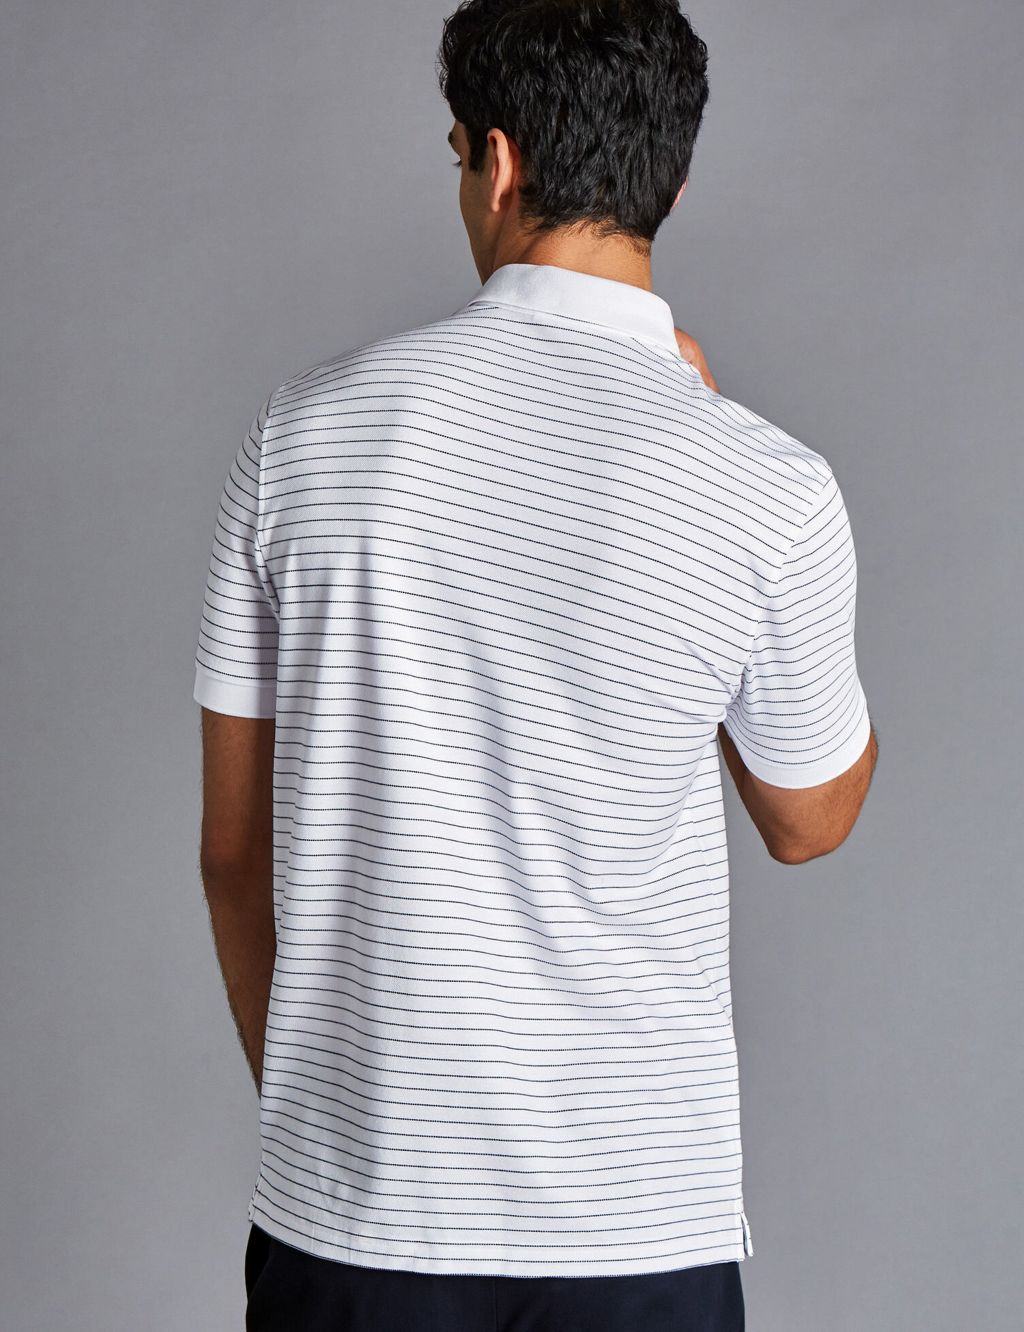 Cotton Rich Striped Pique Polo Shirt image 4